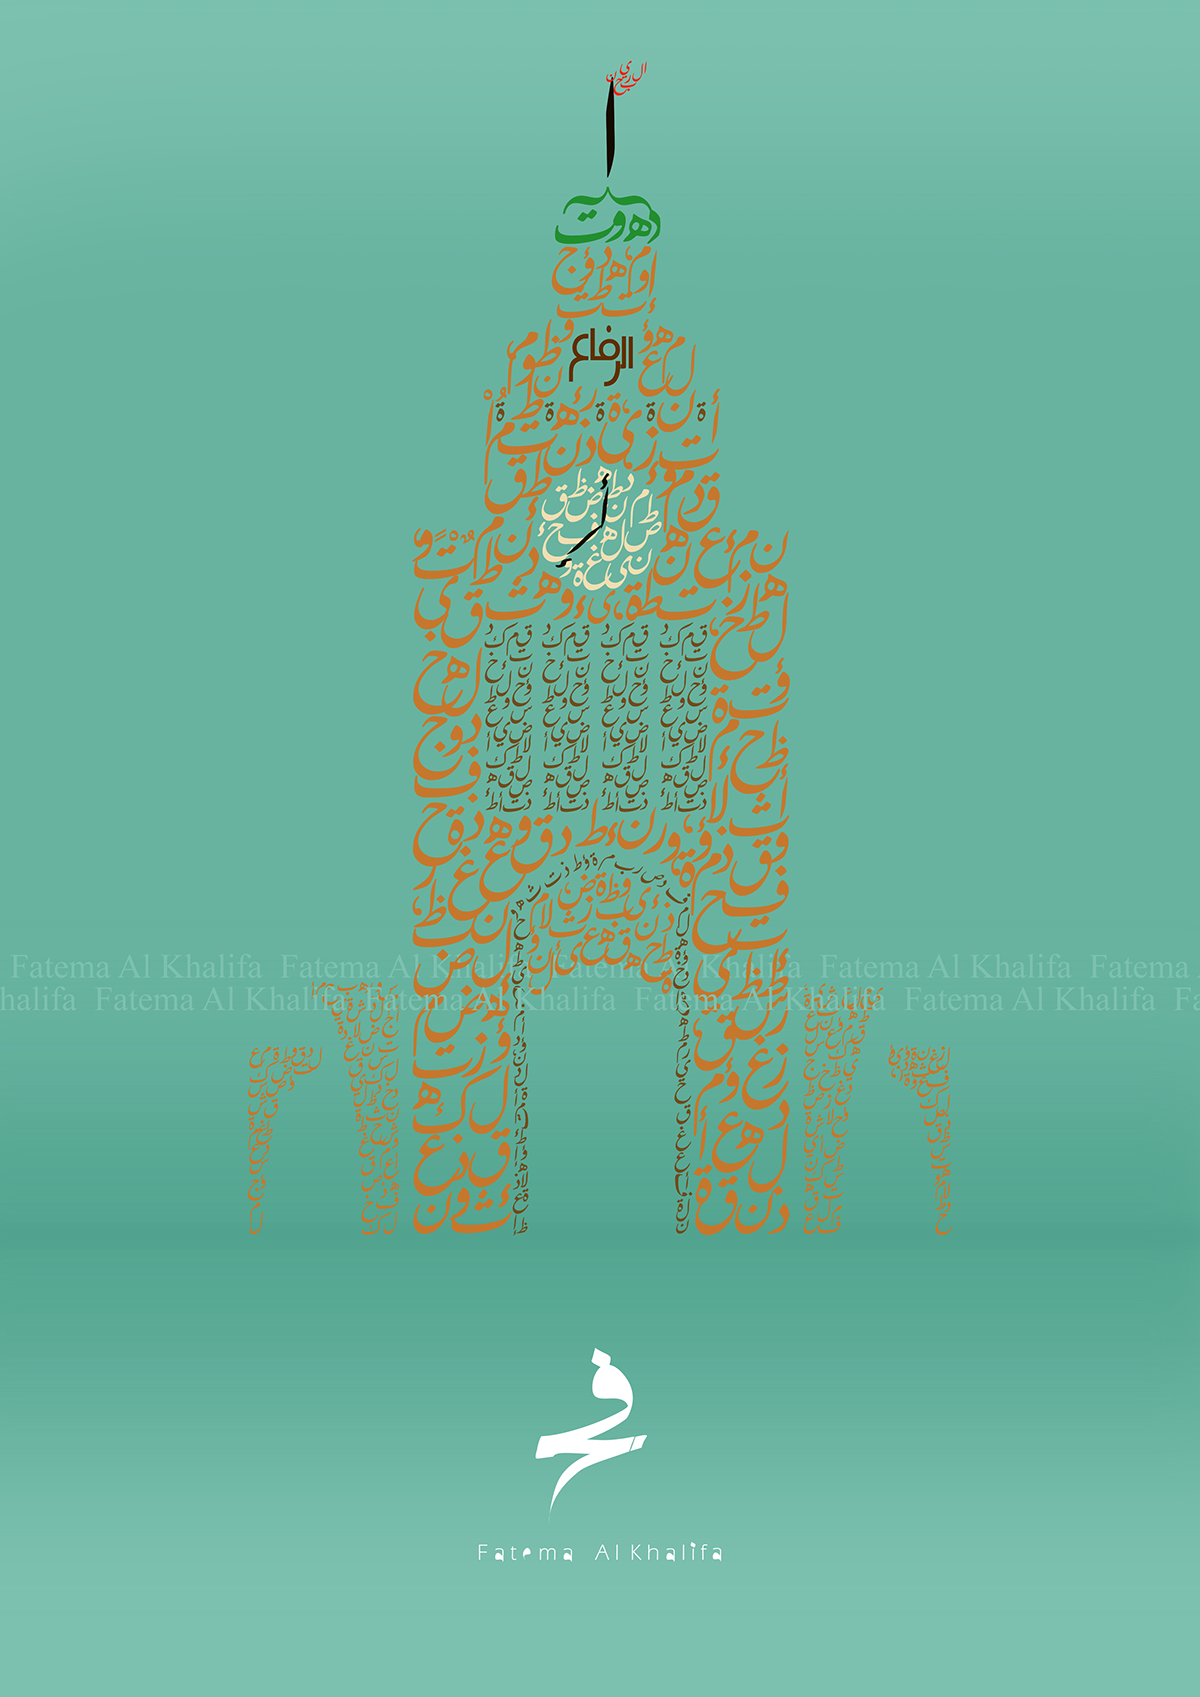 Bahrain riffa Riffa clock clock tower arabic arabic typography